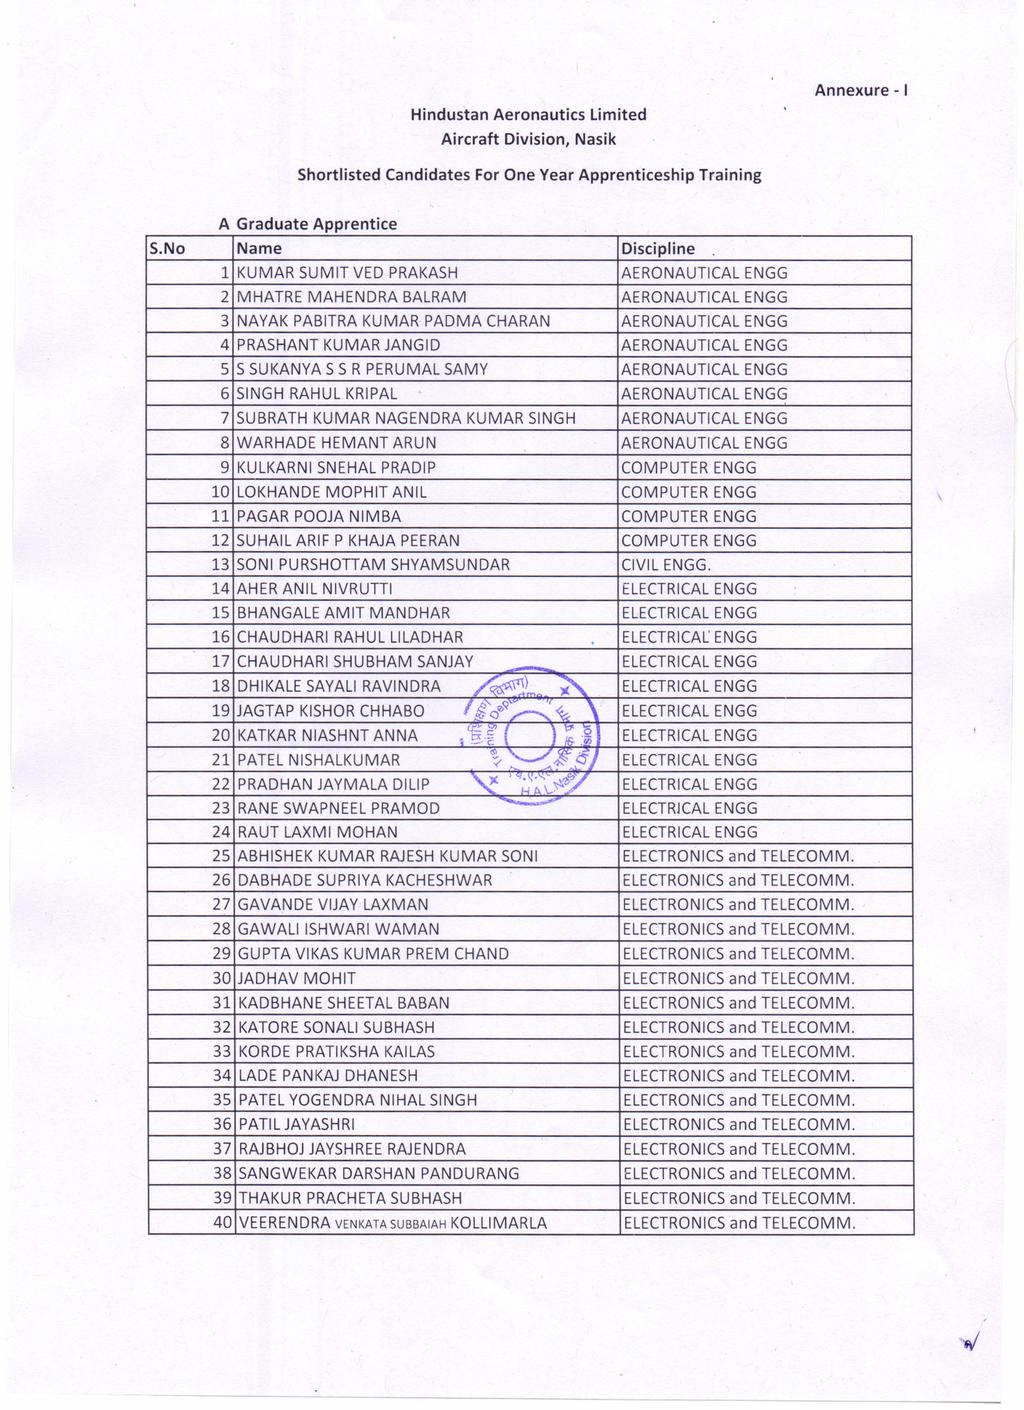 Hindustan Aeronautics Limited Aircraft Division, Nasik Annexure I Shortlisted Candidates For One Year Apprenticeship Training A Graduate Apprentice 1 KUMAR SUMIT VED PRAKASH AERONAUTICAL 2 MHATRE